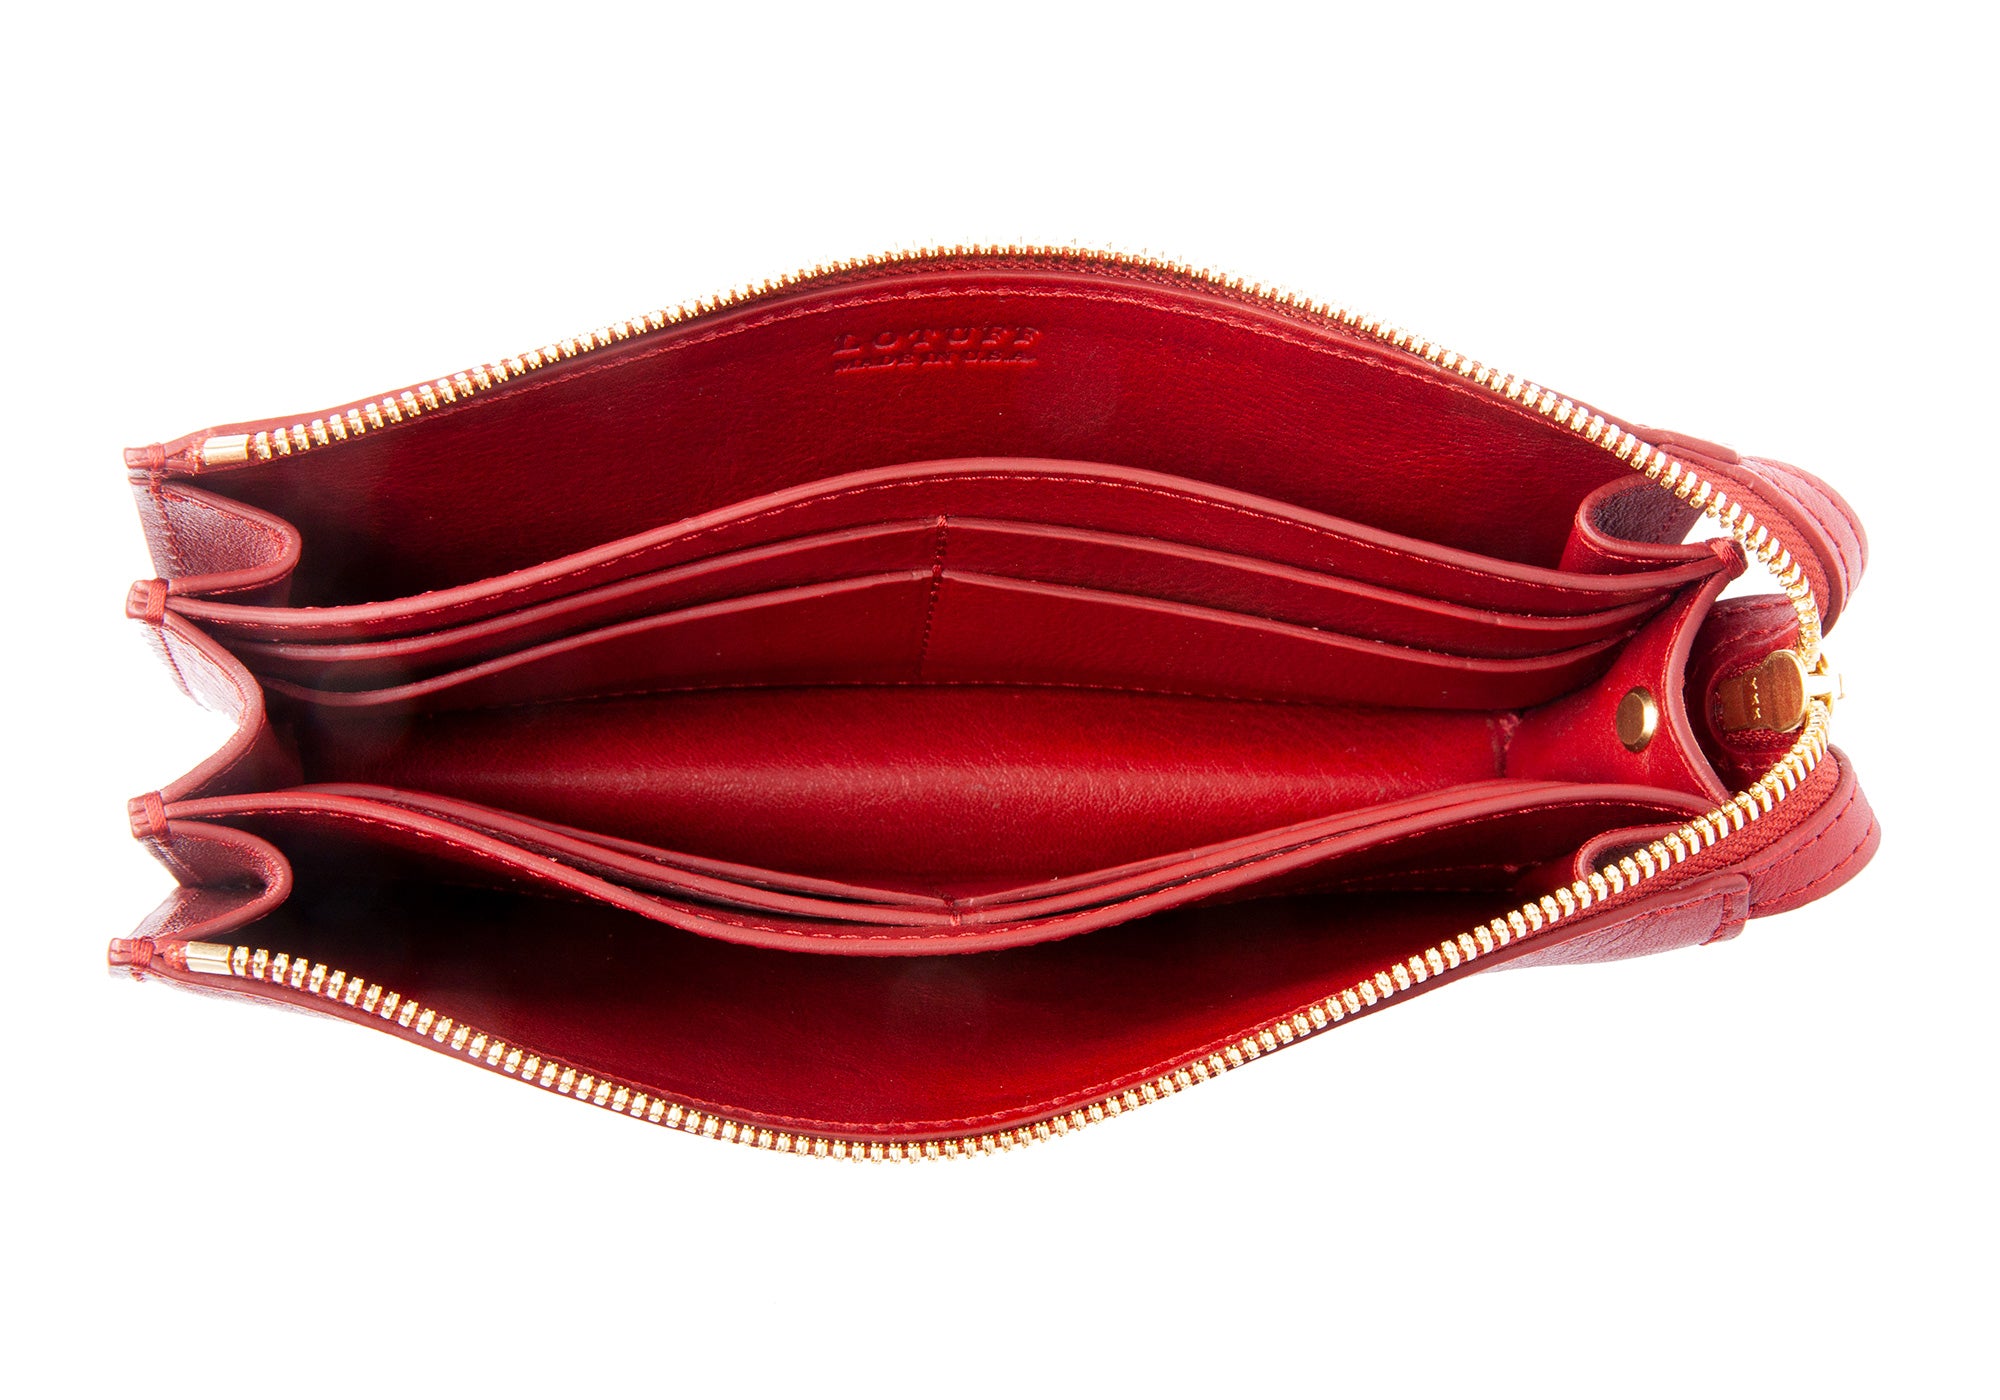 Tripp Wallet - Handmade Leather Accessory